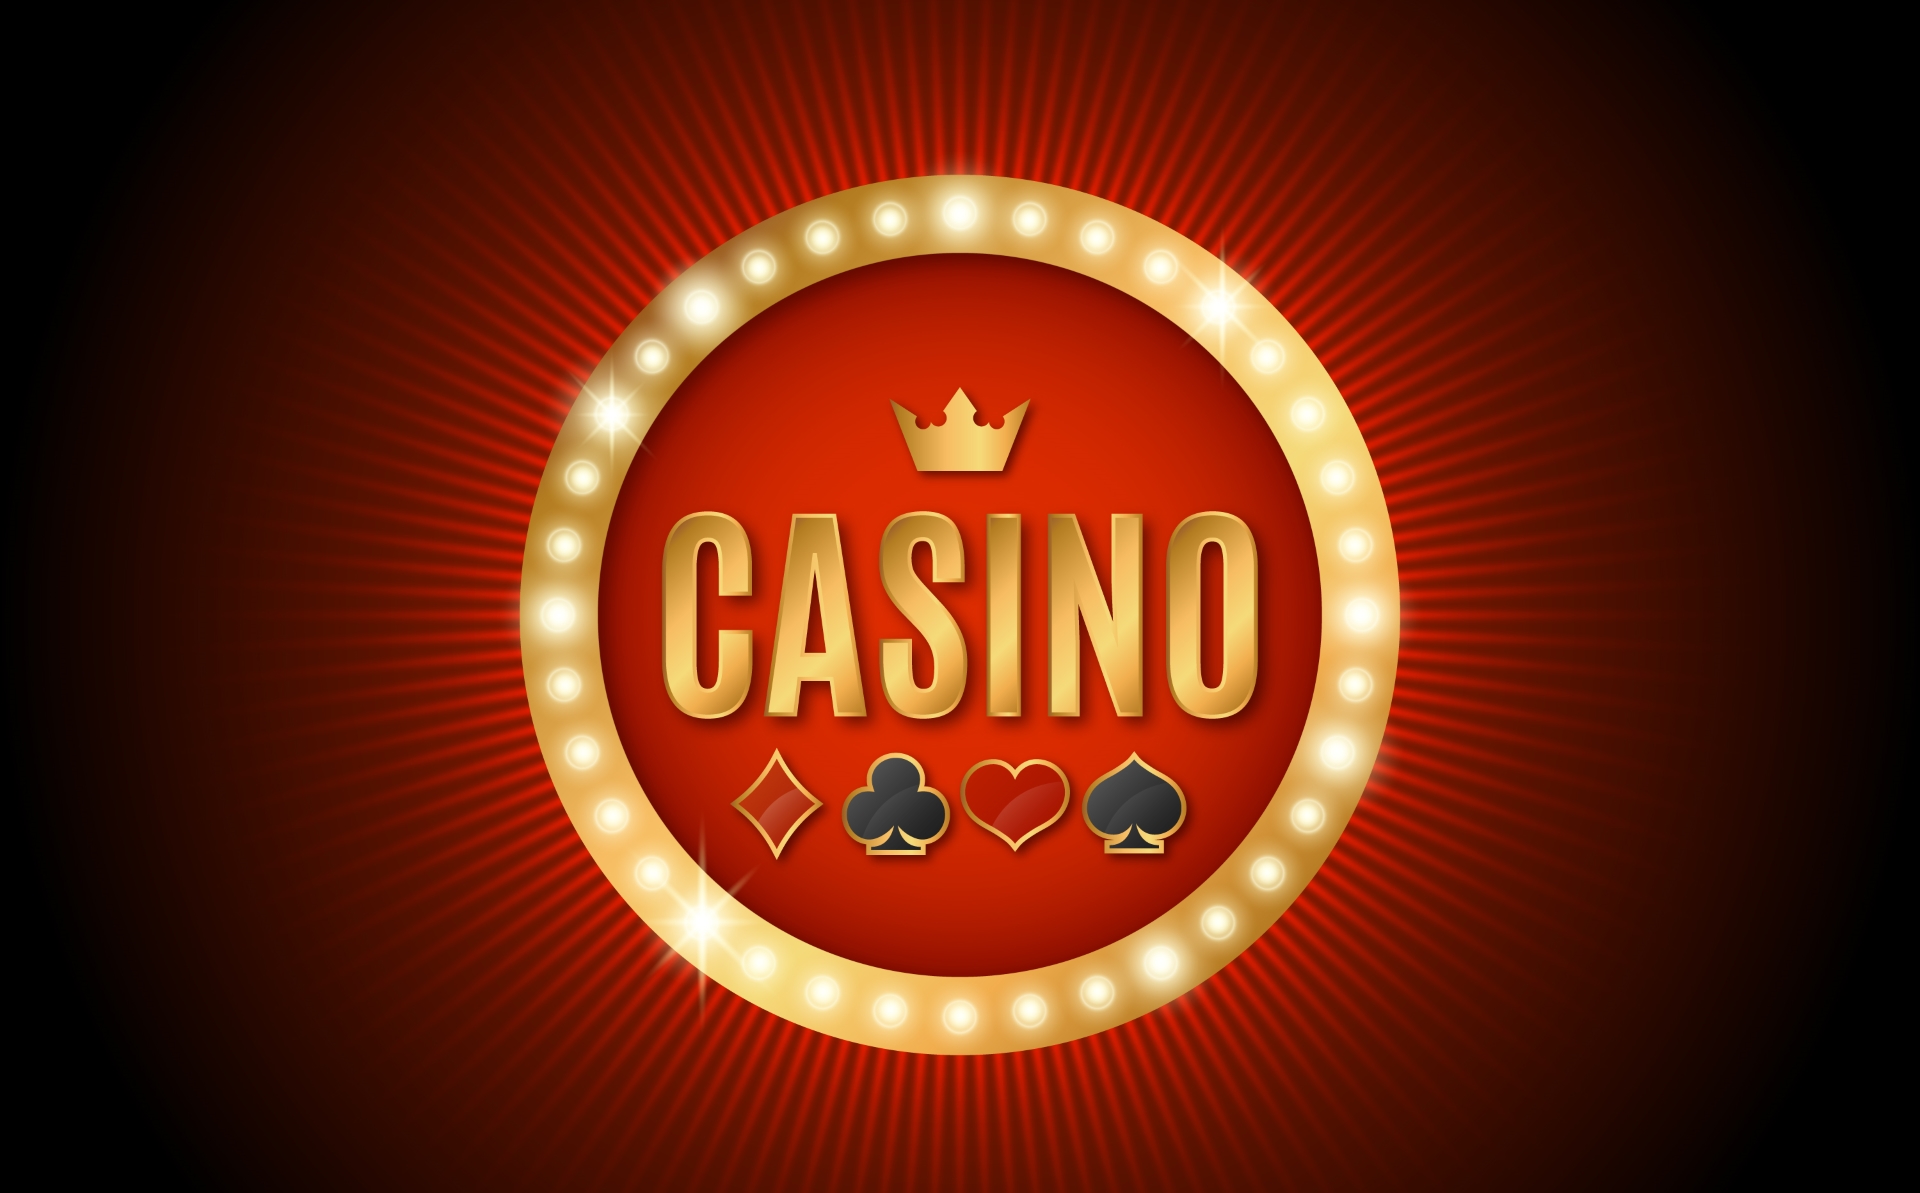 Daddy casino apk. Казино. Логотип казино. Вывеска казино. Casino com логотип.